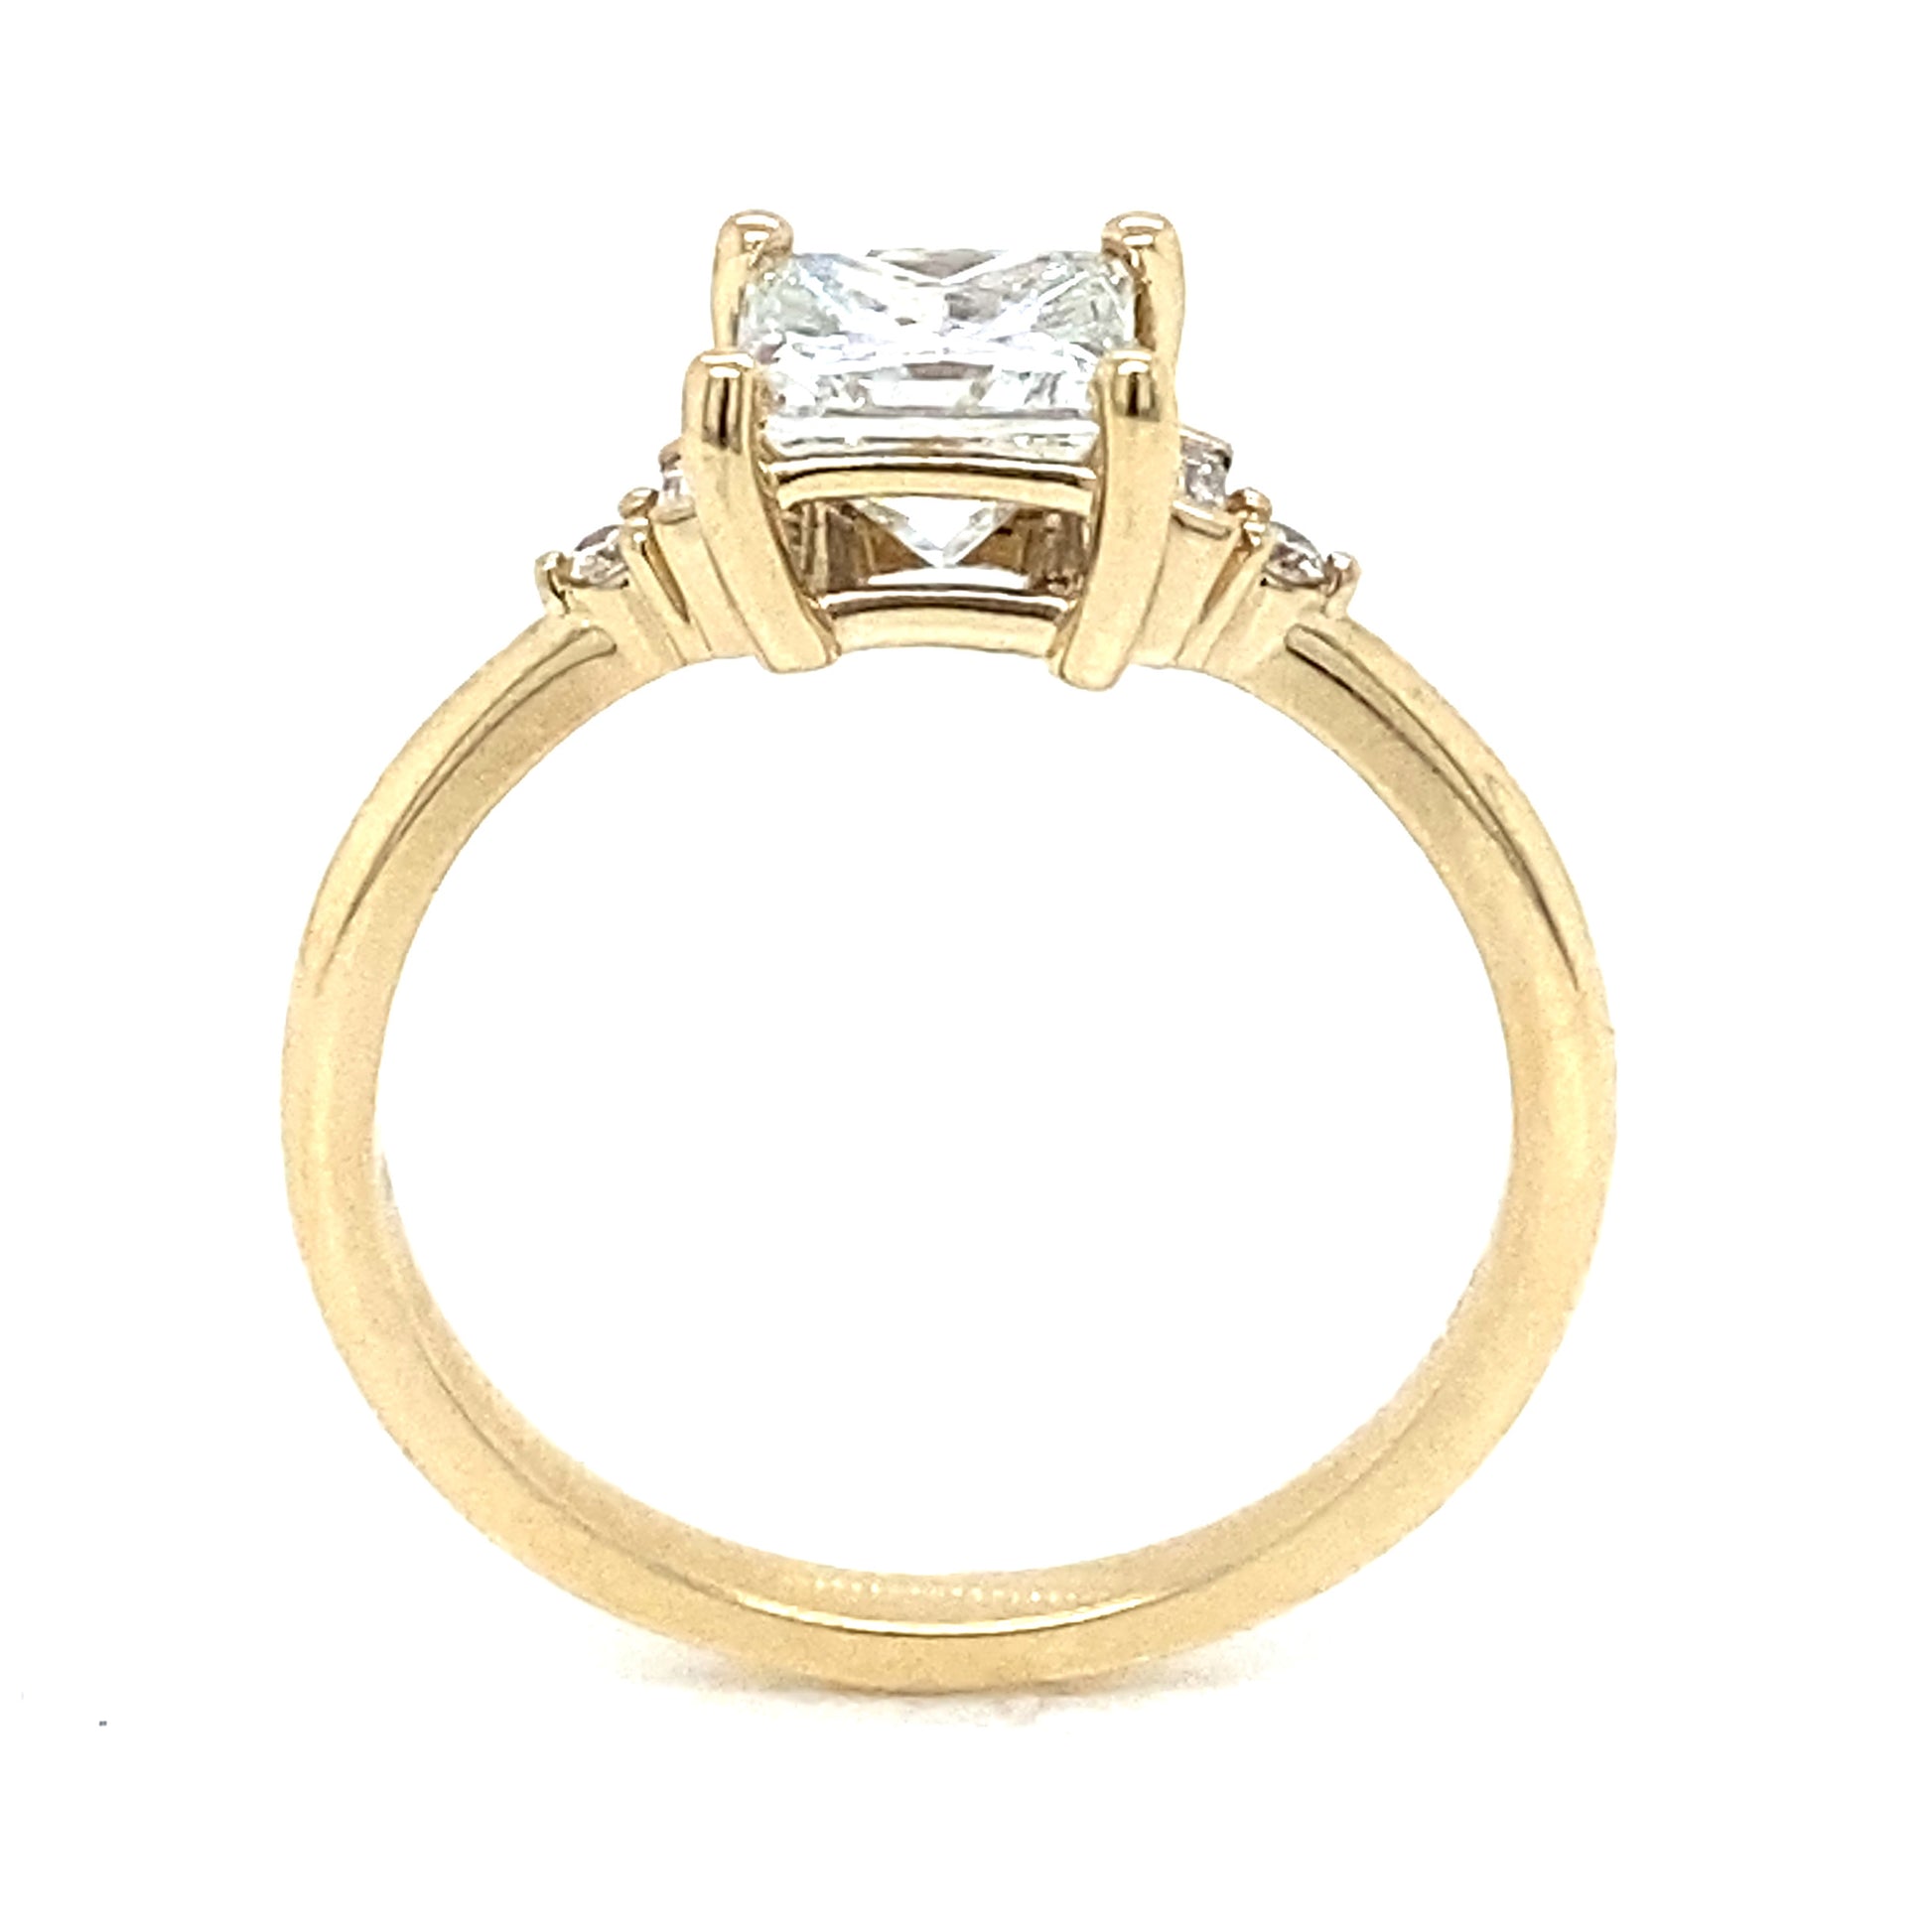 1.23 GIA Princess Cut Diamond Engagement Ring in 14k Yellow Gold